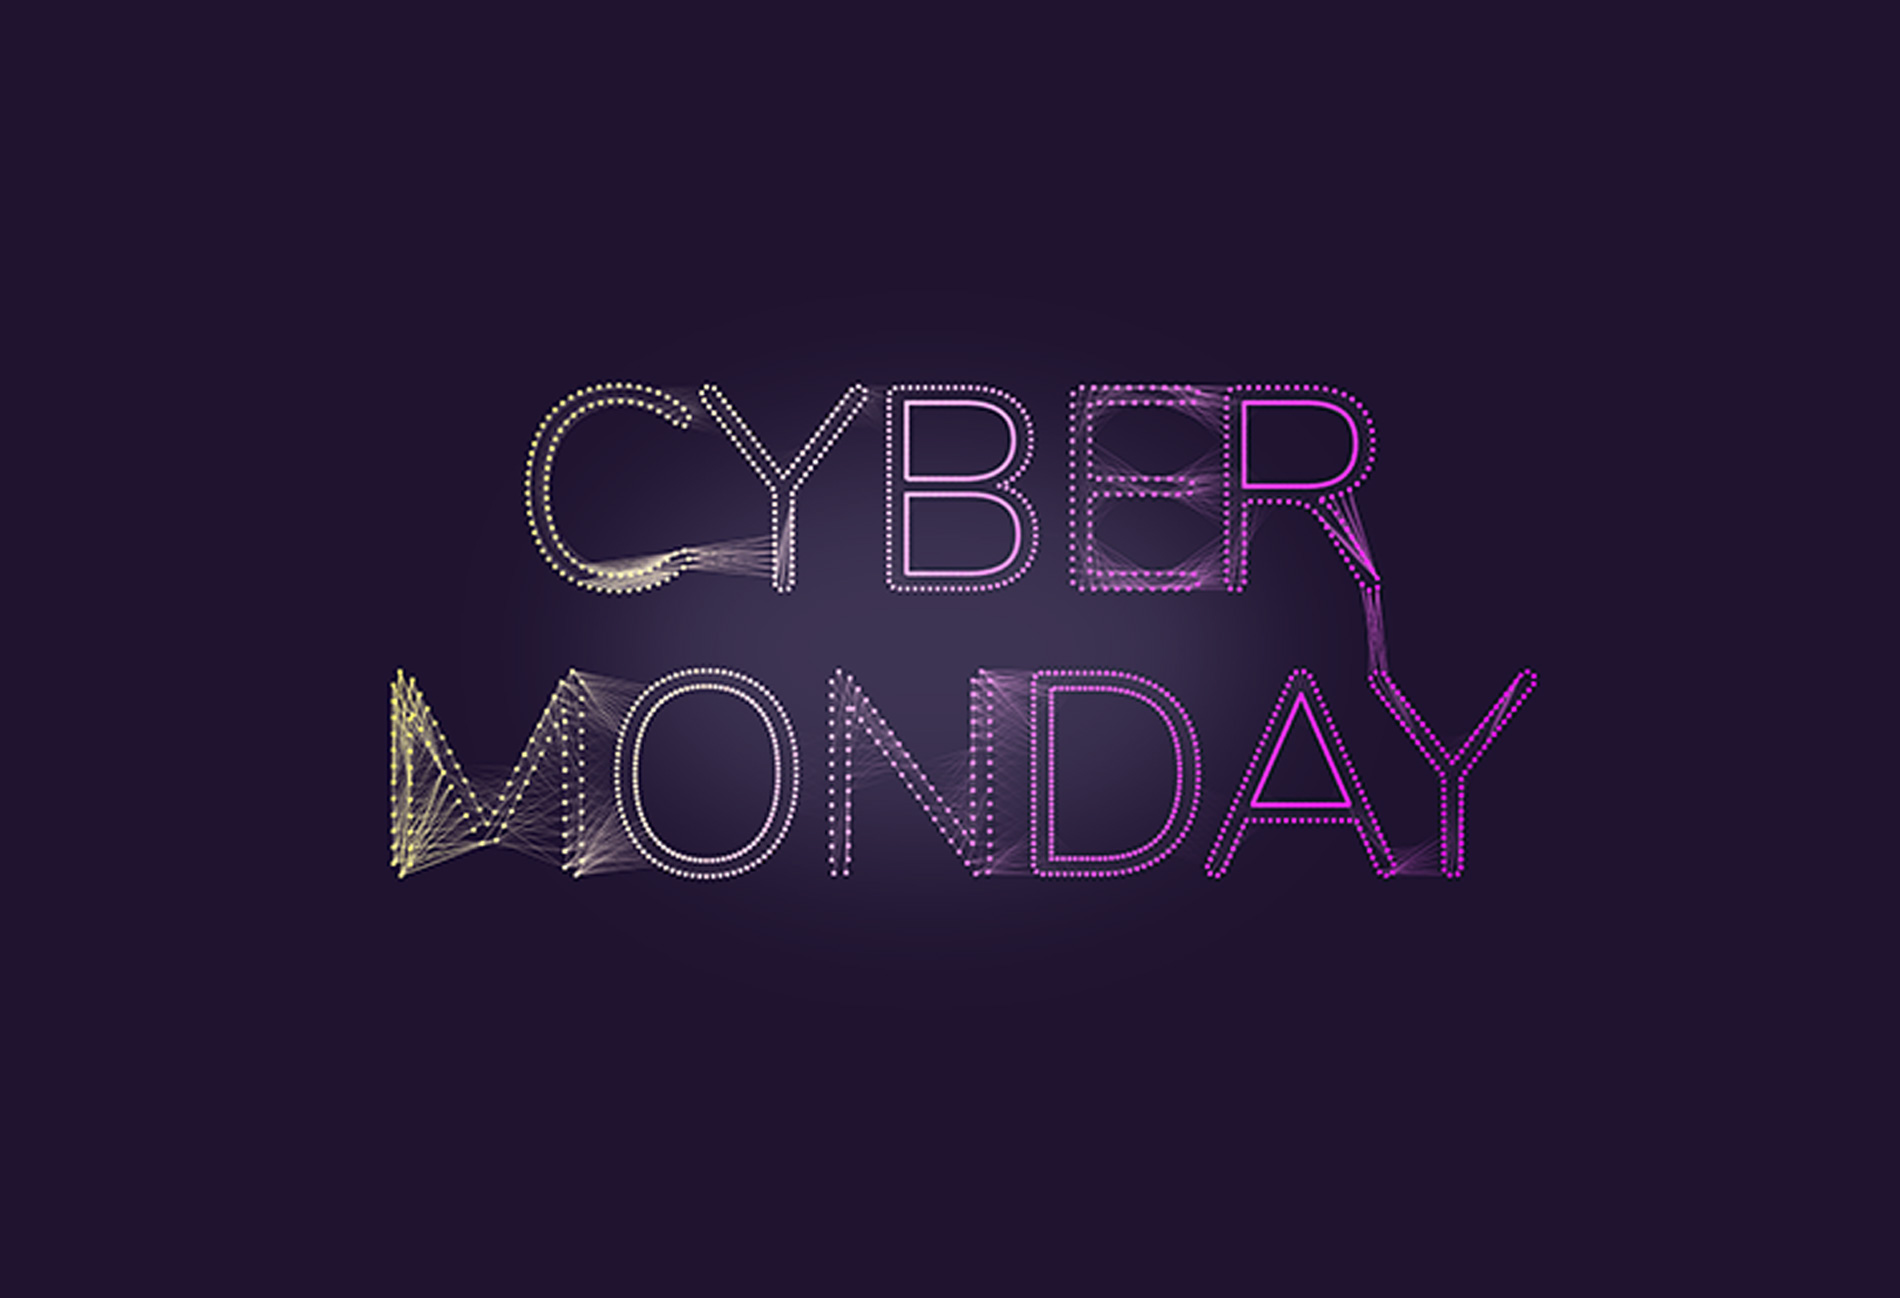 Cyber Monday Campaign 2